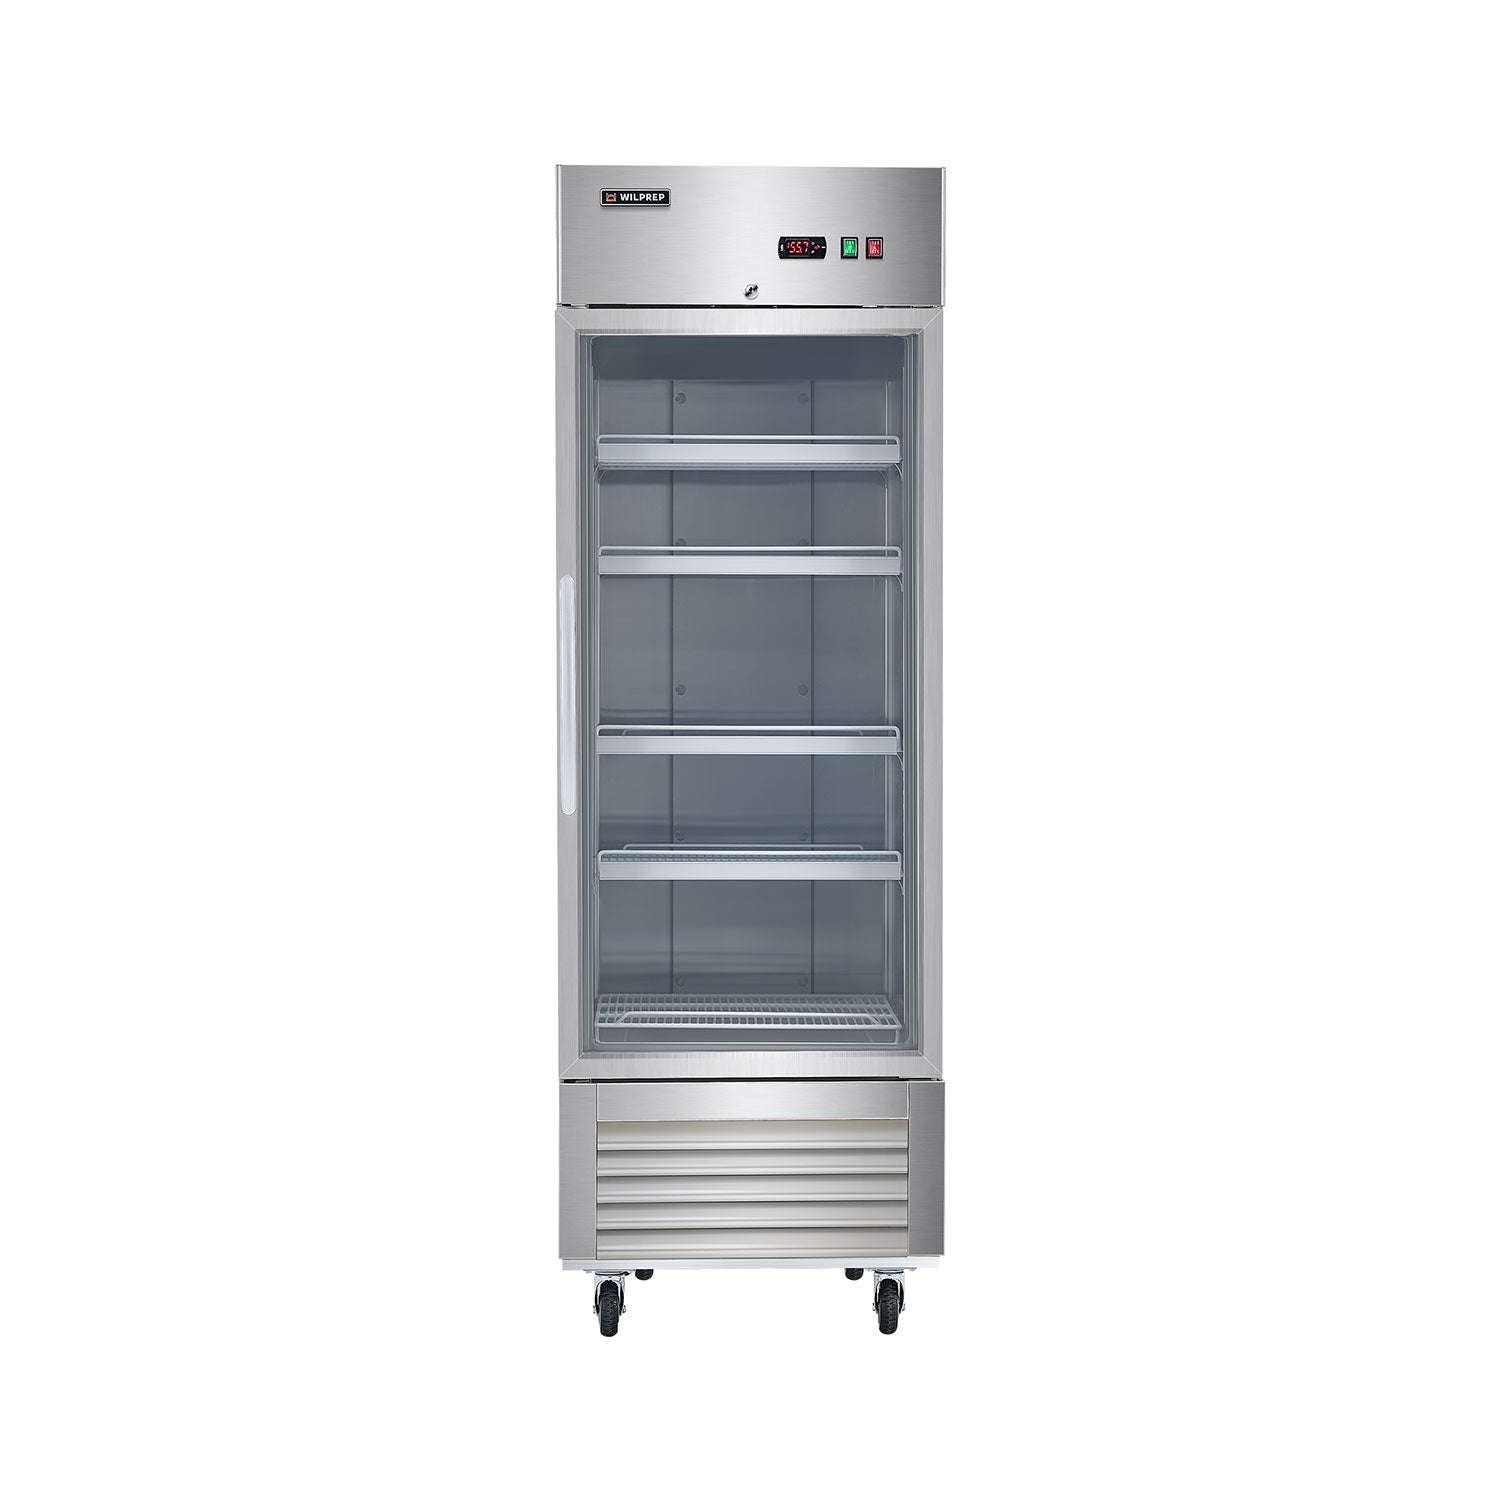 Wilprep 27-inch Single Glass Door Refrigerator for Sale